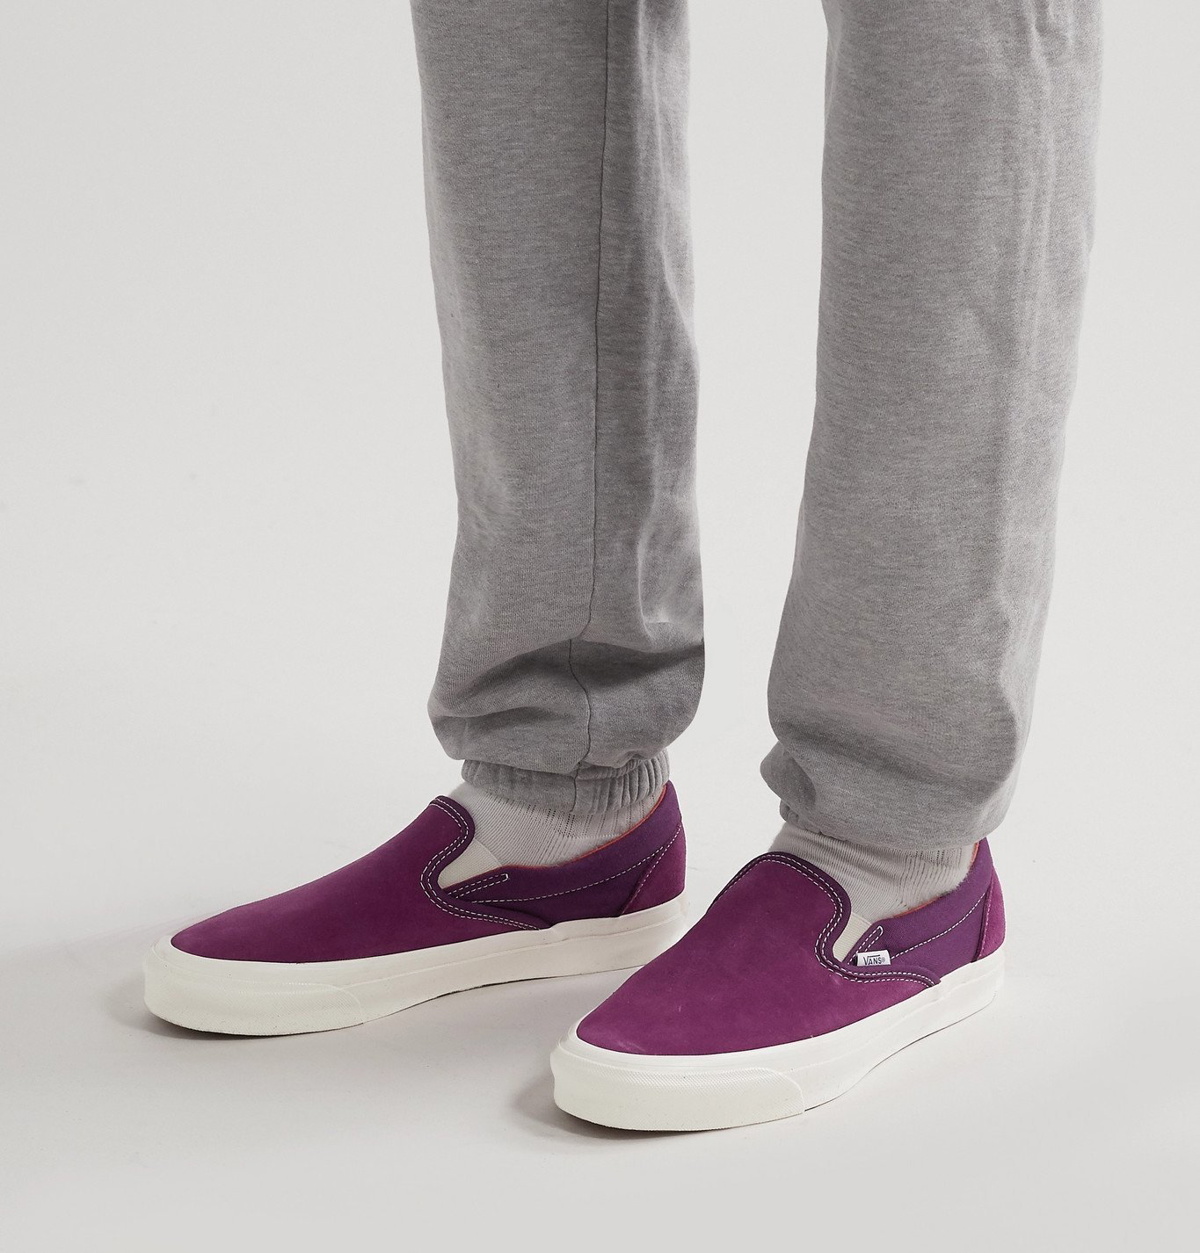 Vans - OG Classic Suede and Canvas Slip-On Sneakers - Purple Vans